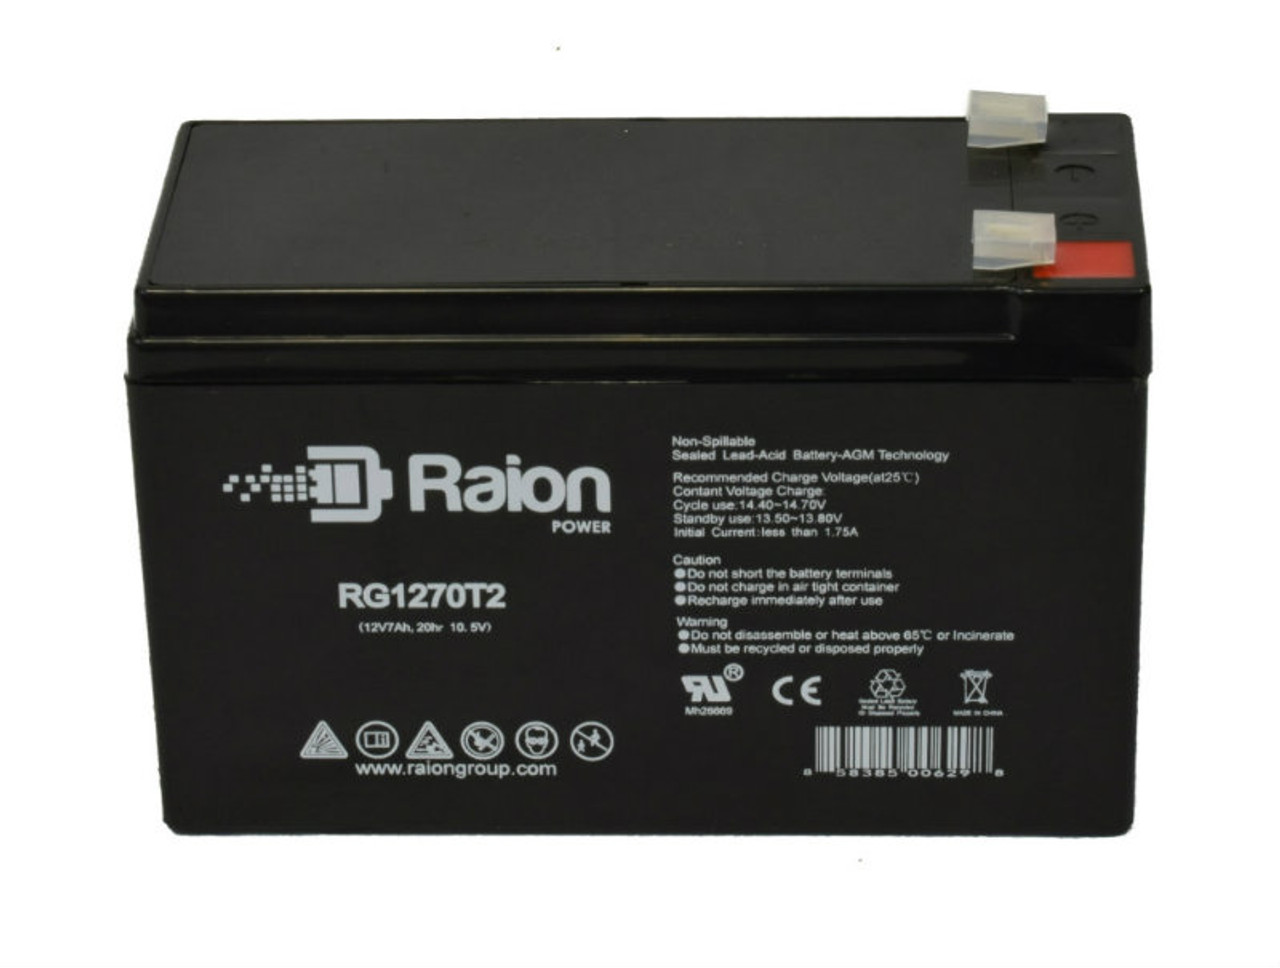 Raion Power RG1270T1 12V 7Ah Lead Acid Battery for Cybex 770AT Arc Trainer